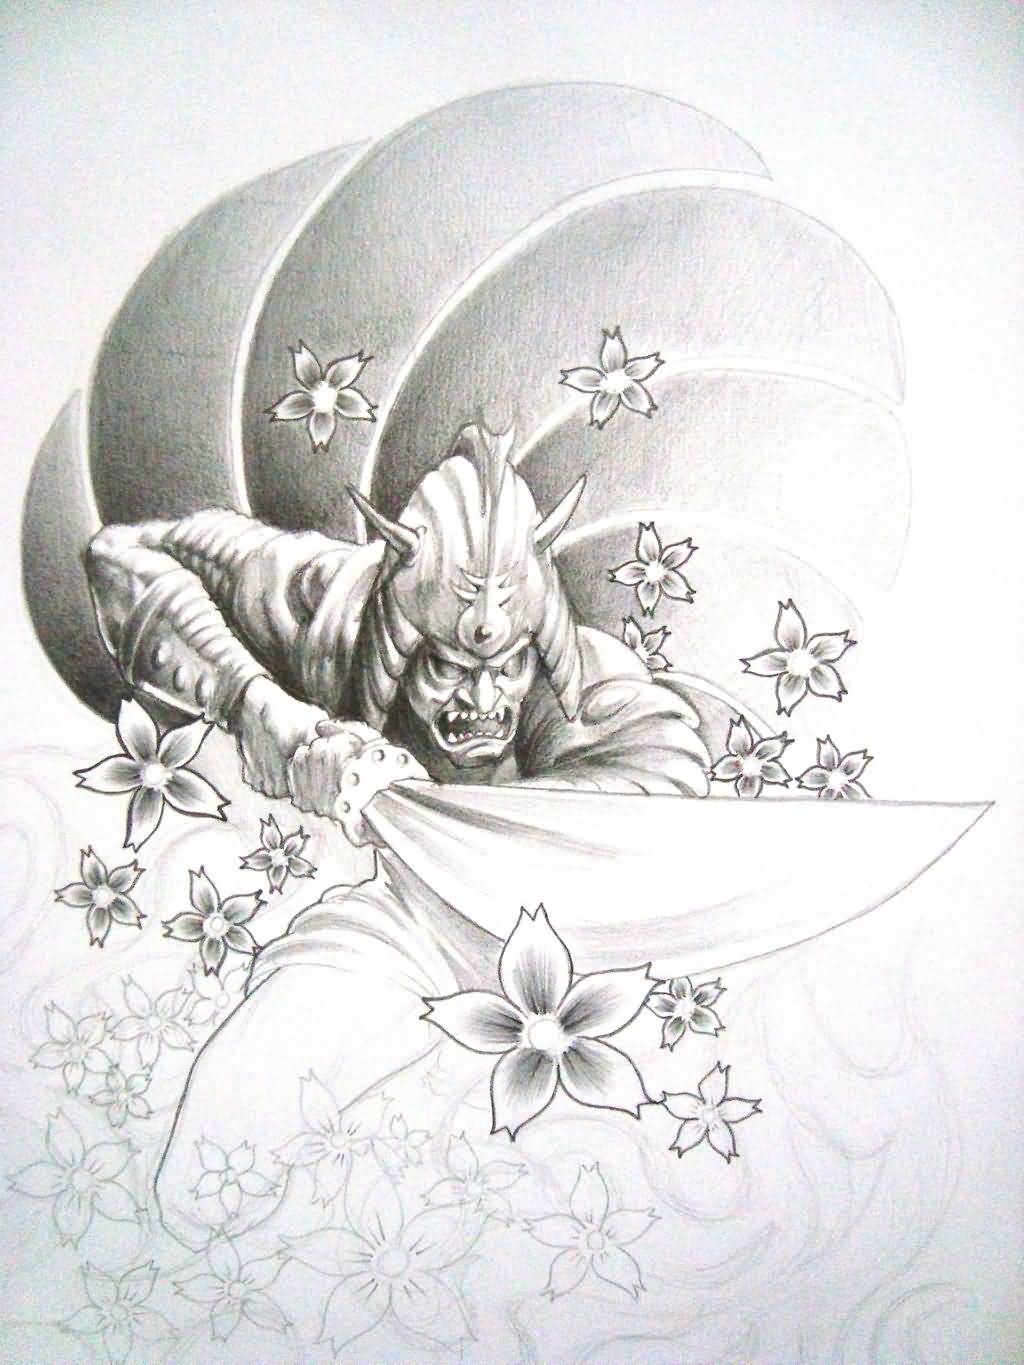 Cool Grey Ink Samurai With Flowers Tattoo Design